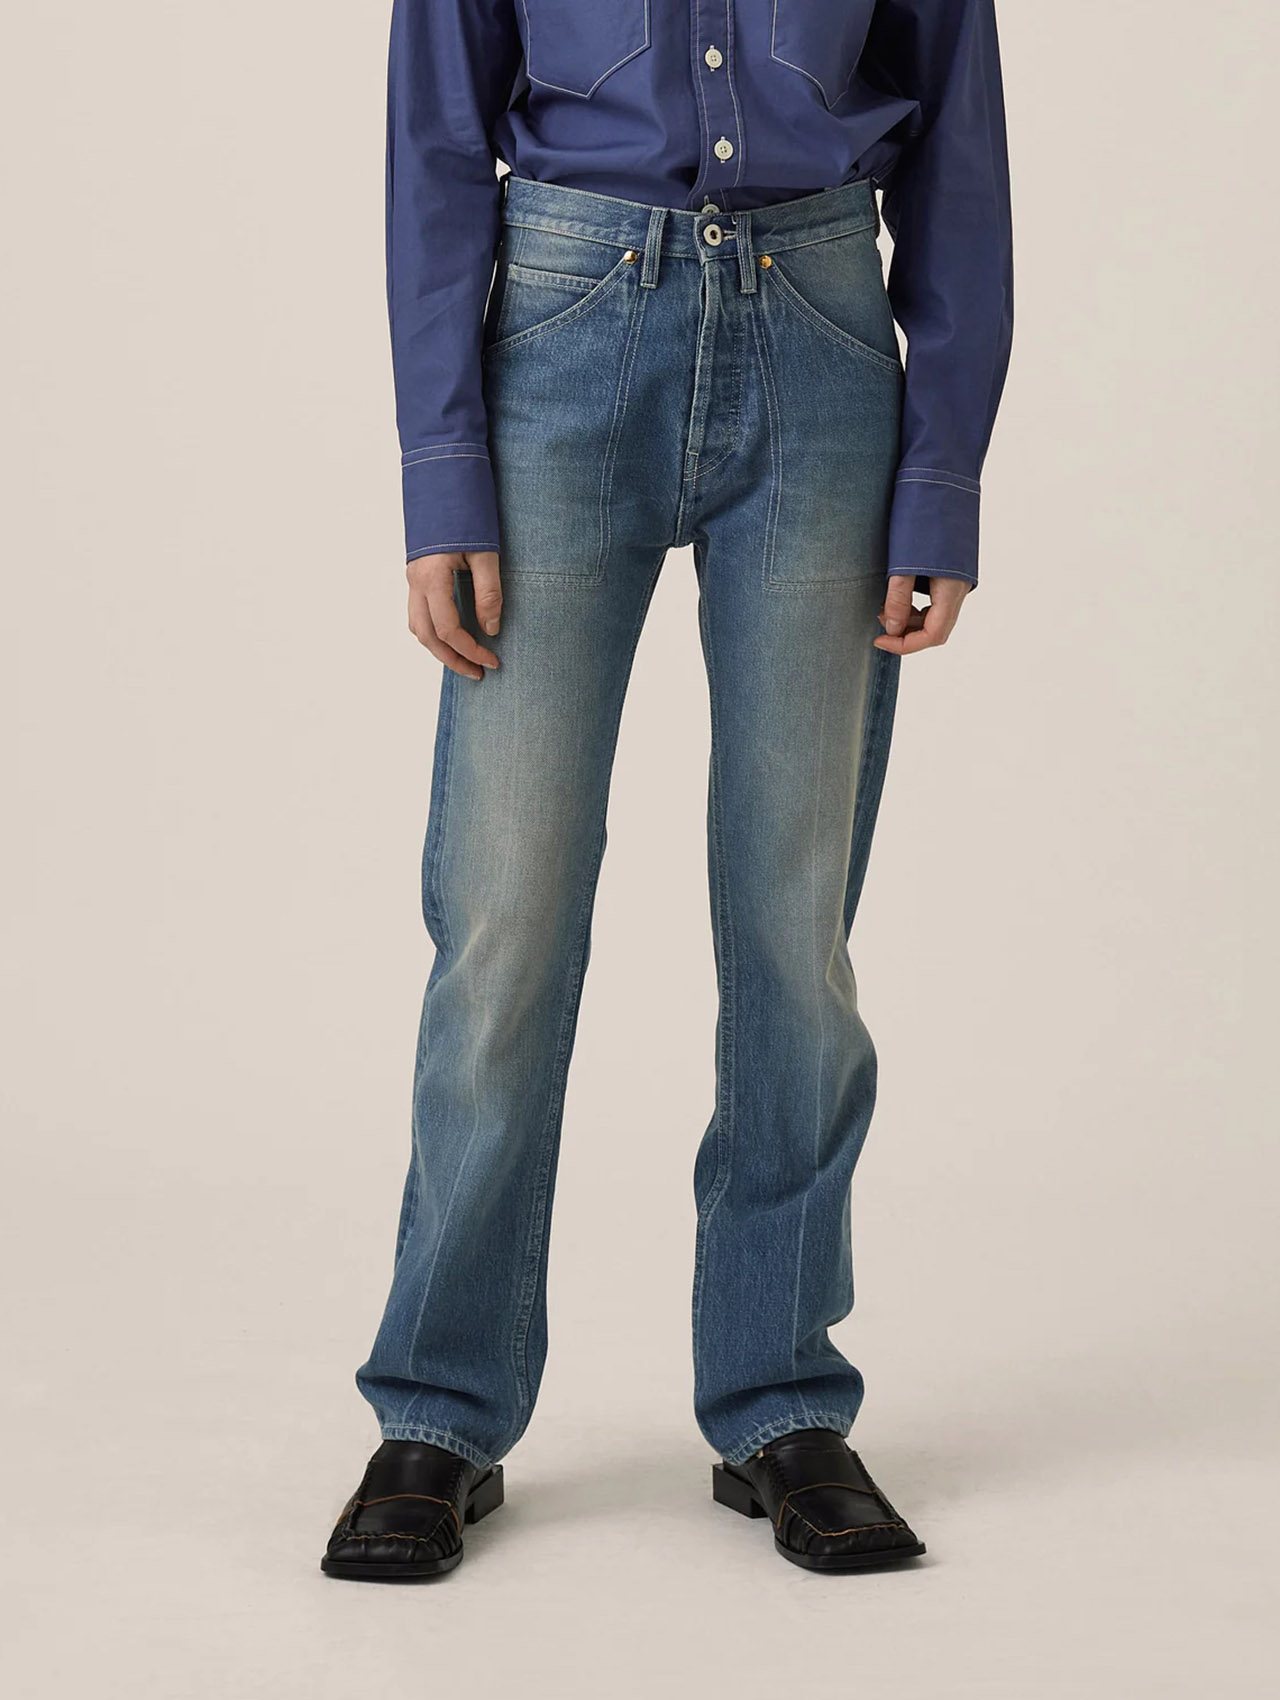 denim, jeans